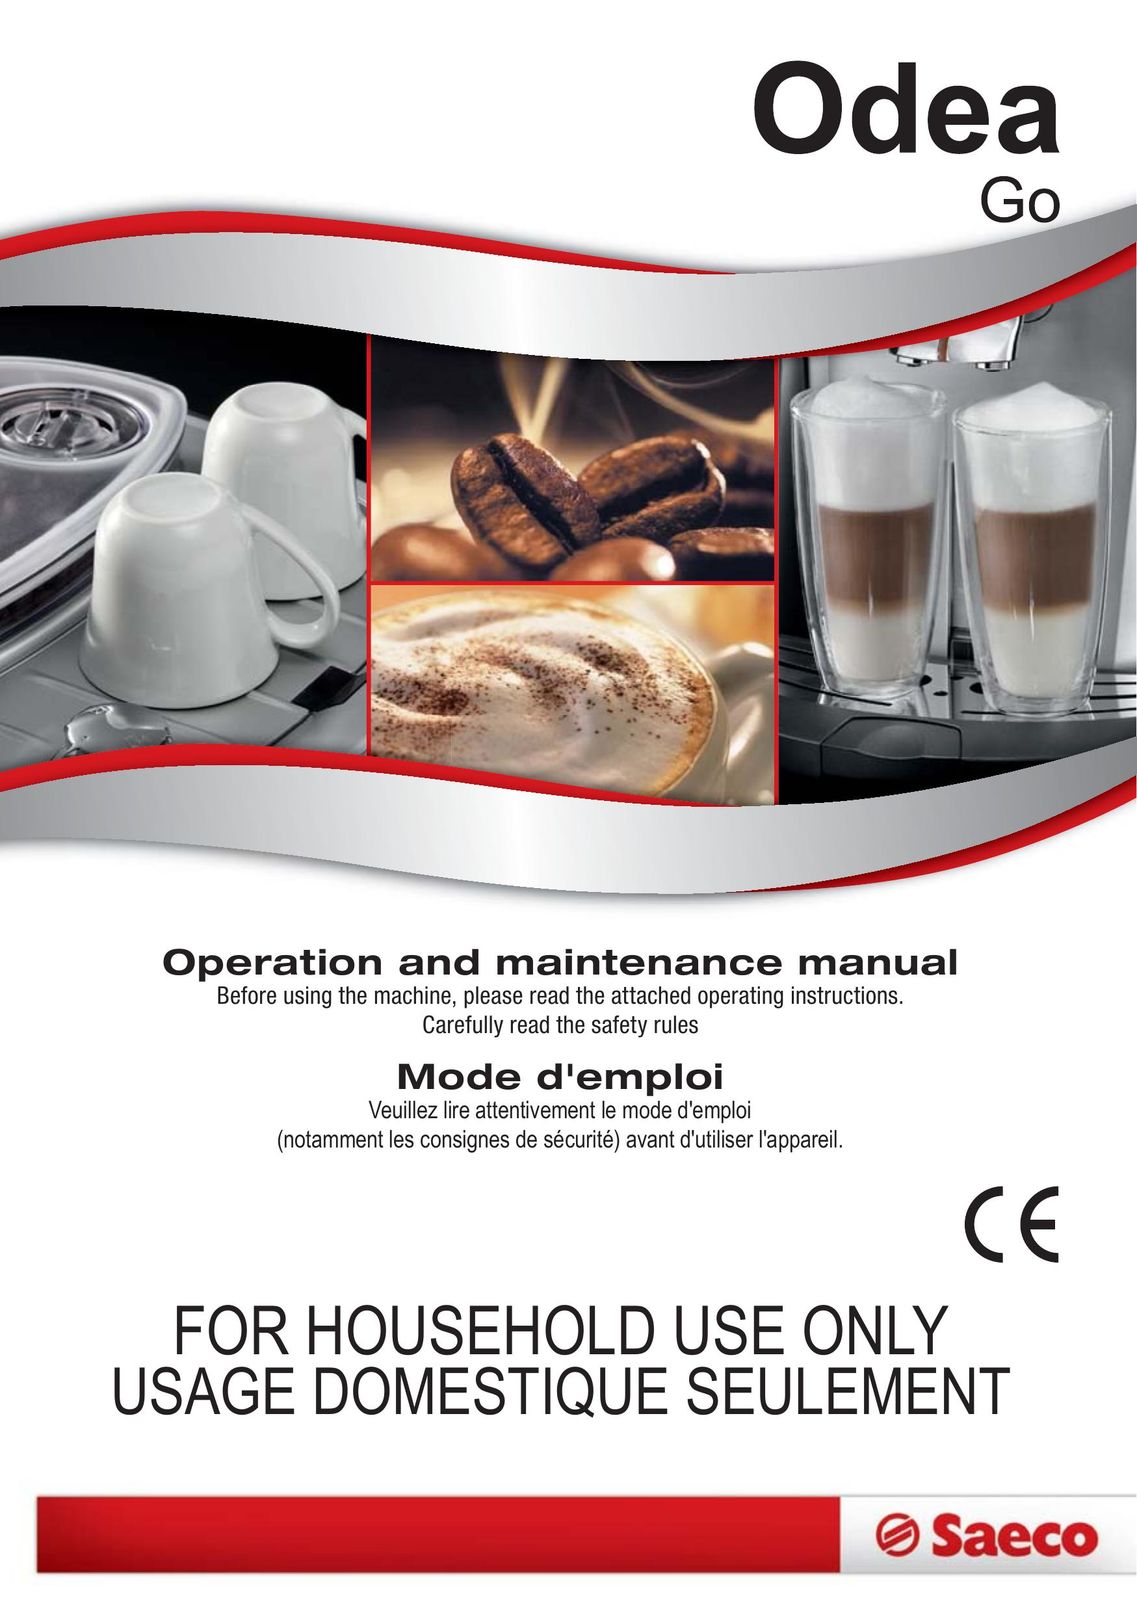 Saeco Coffee Makers SUP0310 Espresso Maker User Manual